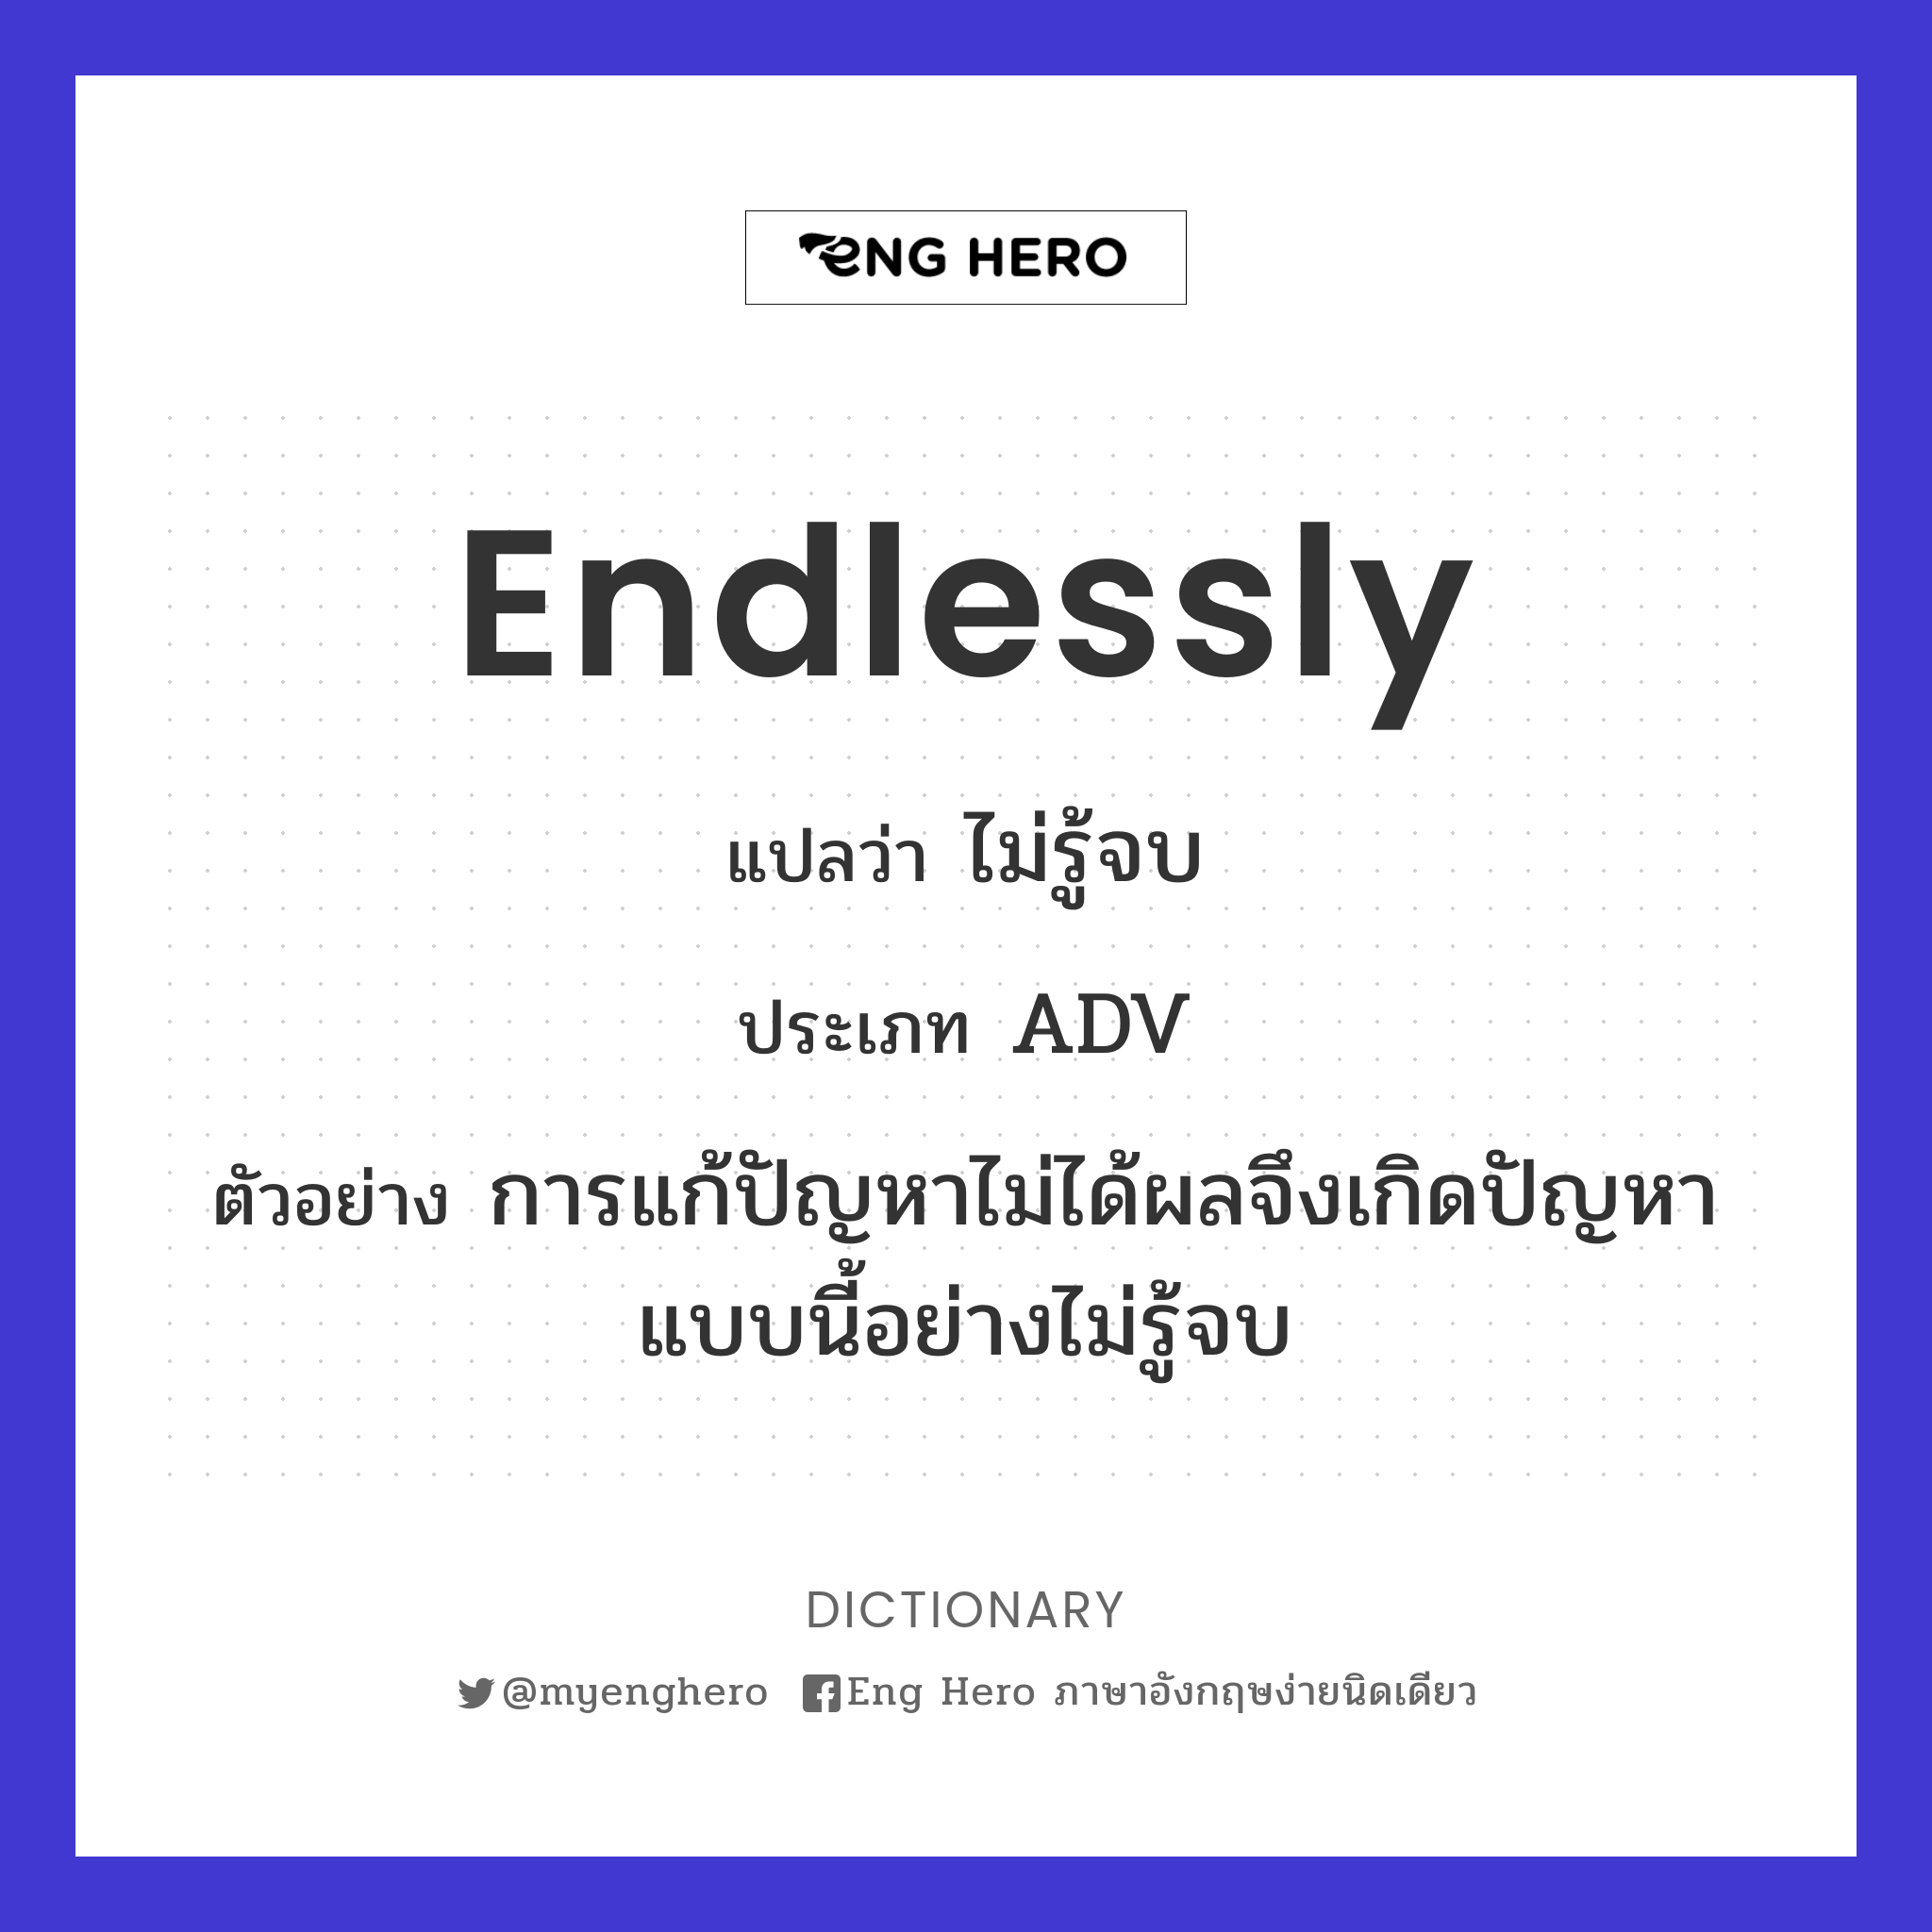 endlessly